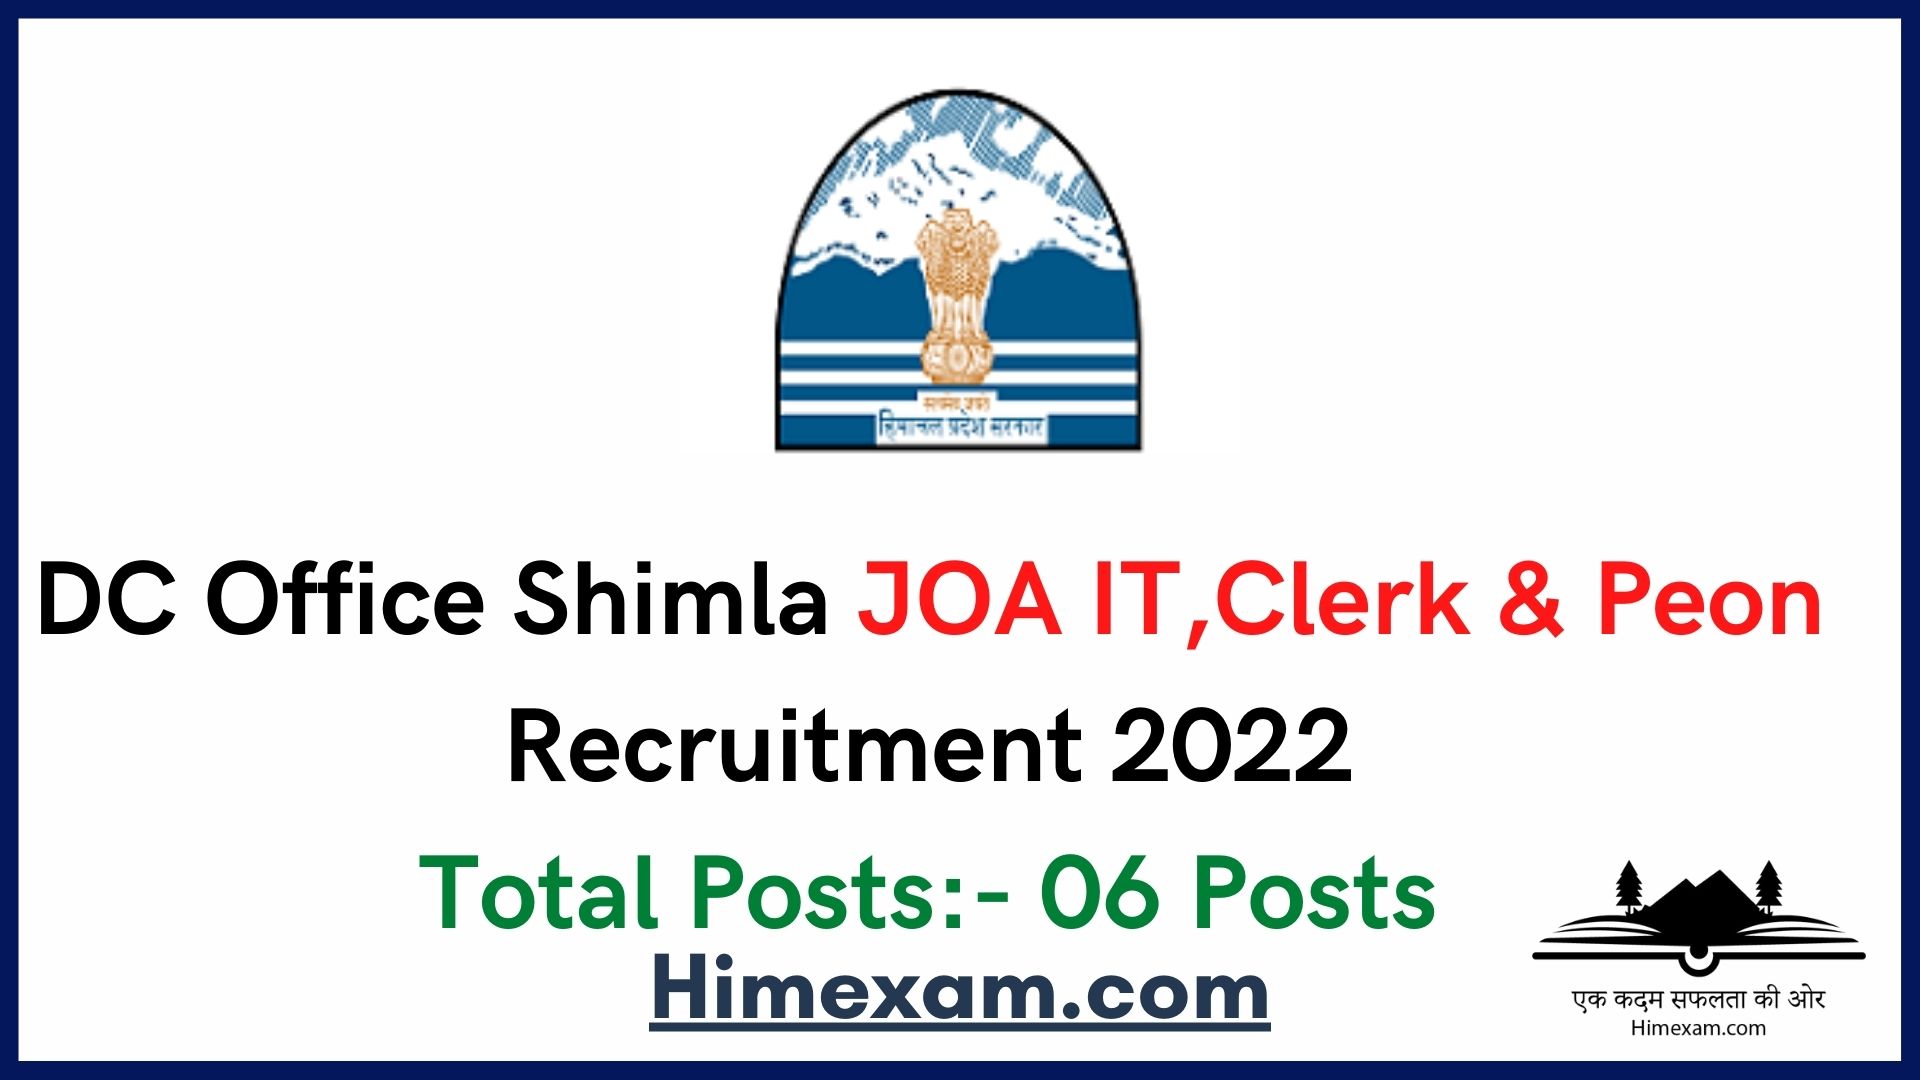 DC Office Shimla JOA IT,Clerk & Peon Recruitment 2022